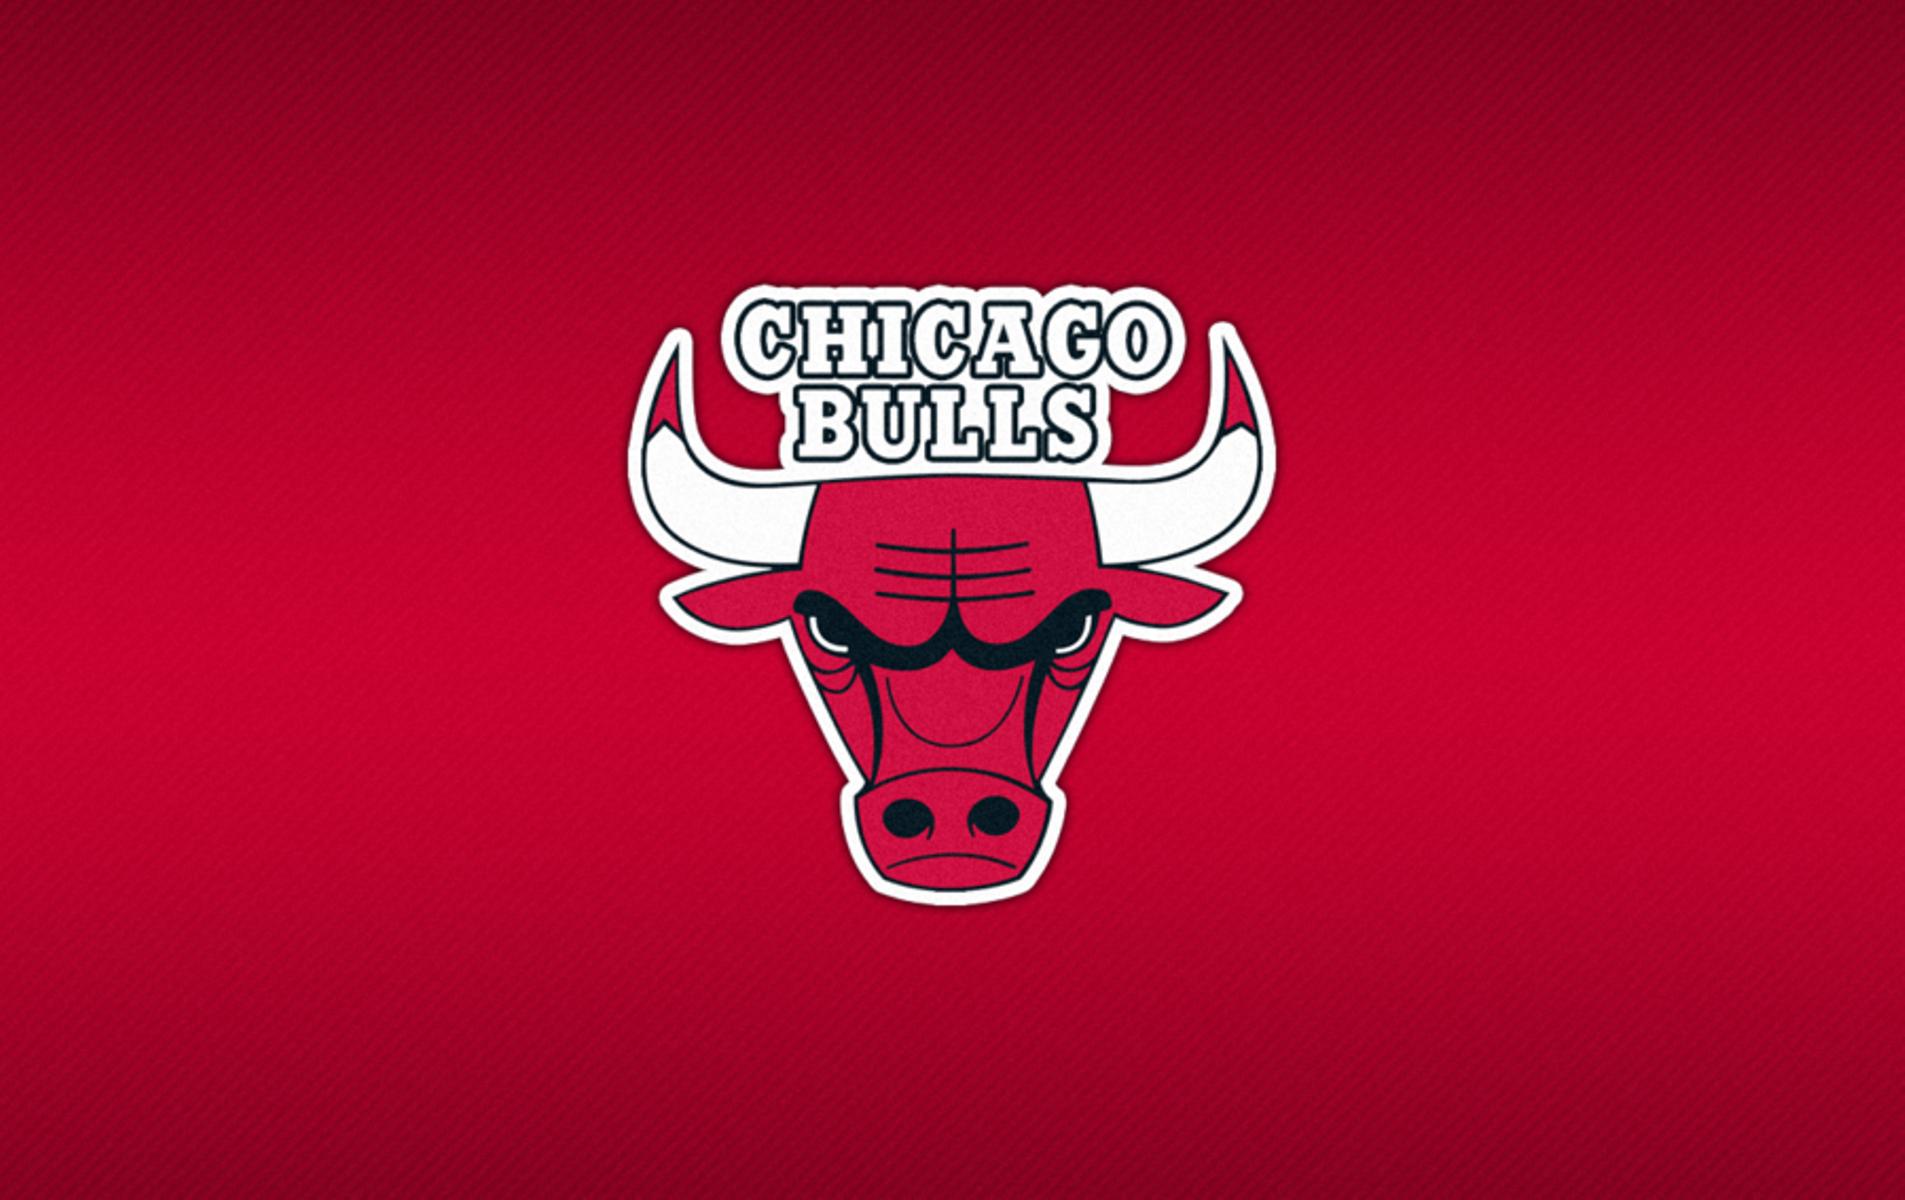 Chicago Bulls Wallpapers HD 2017 - Wallpaper Cave